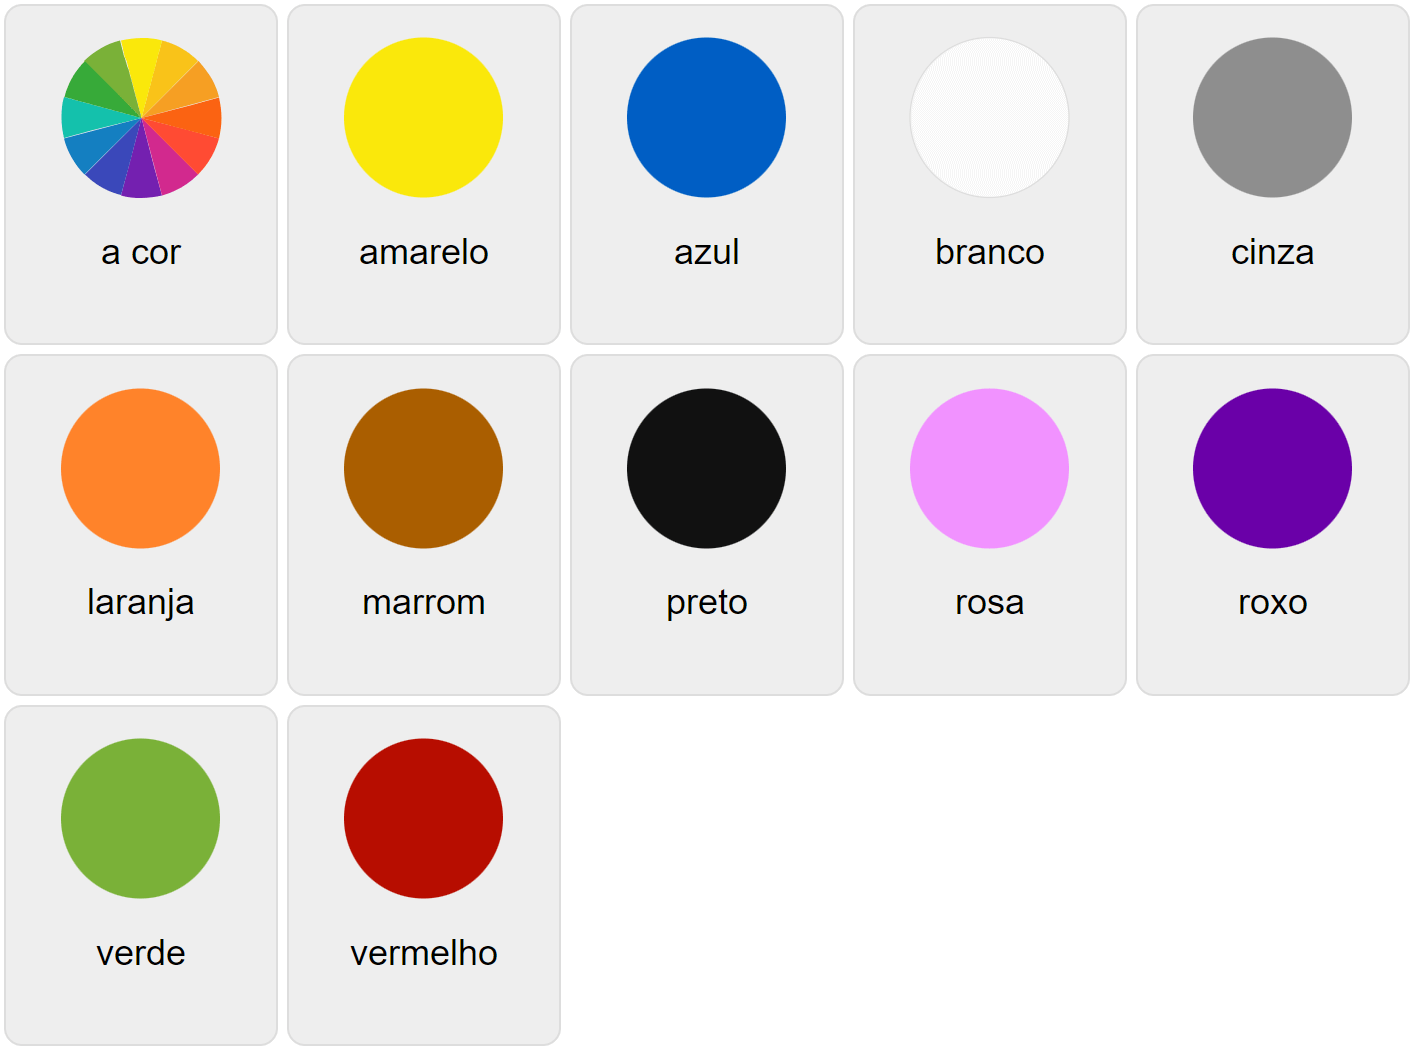 Colors in Portuguese